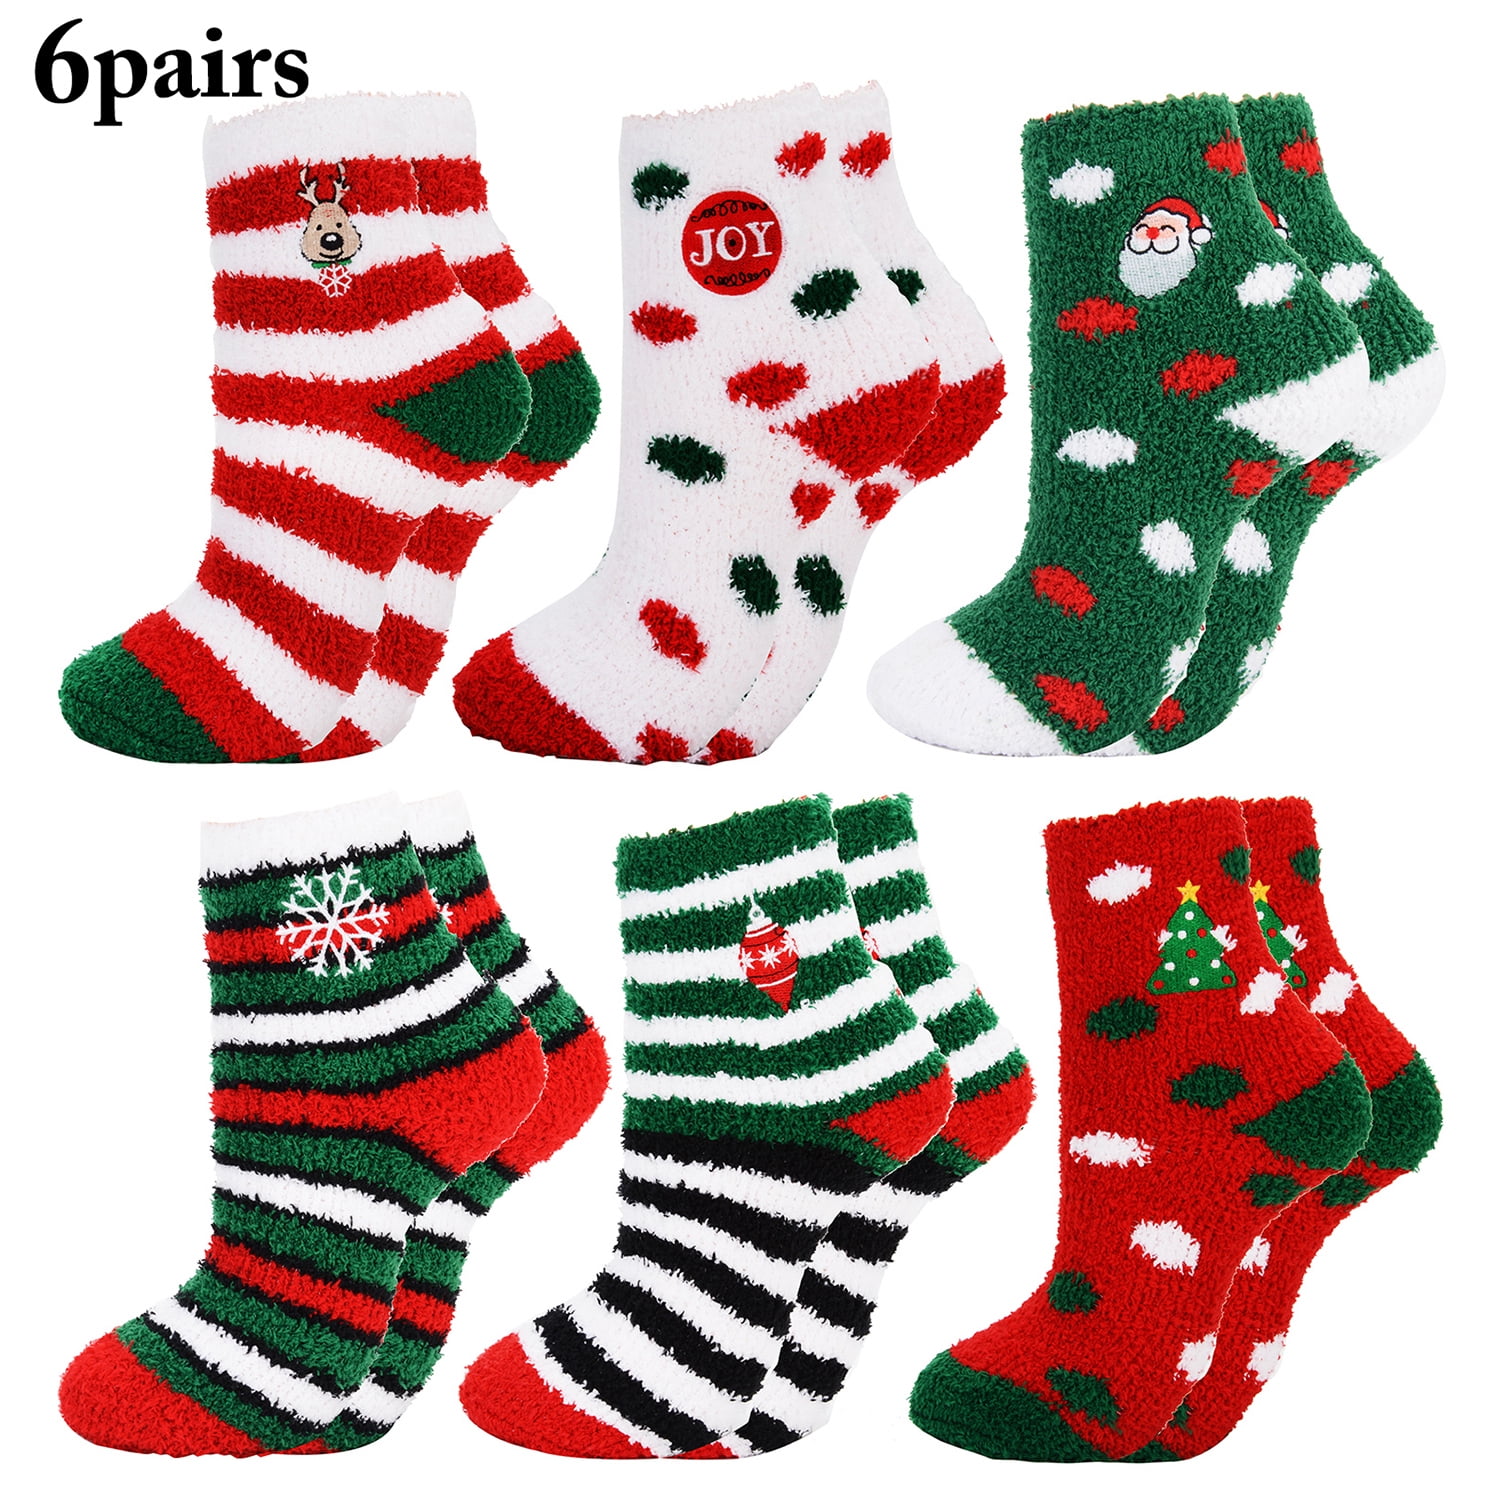 4 Pairs Ladies Soft Fluffy Cosy Bed Socks Santa Warm Christmas Gift Casual S4-7 